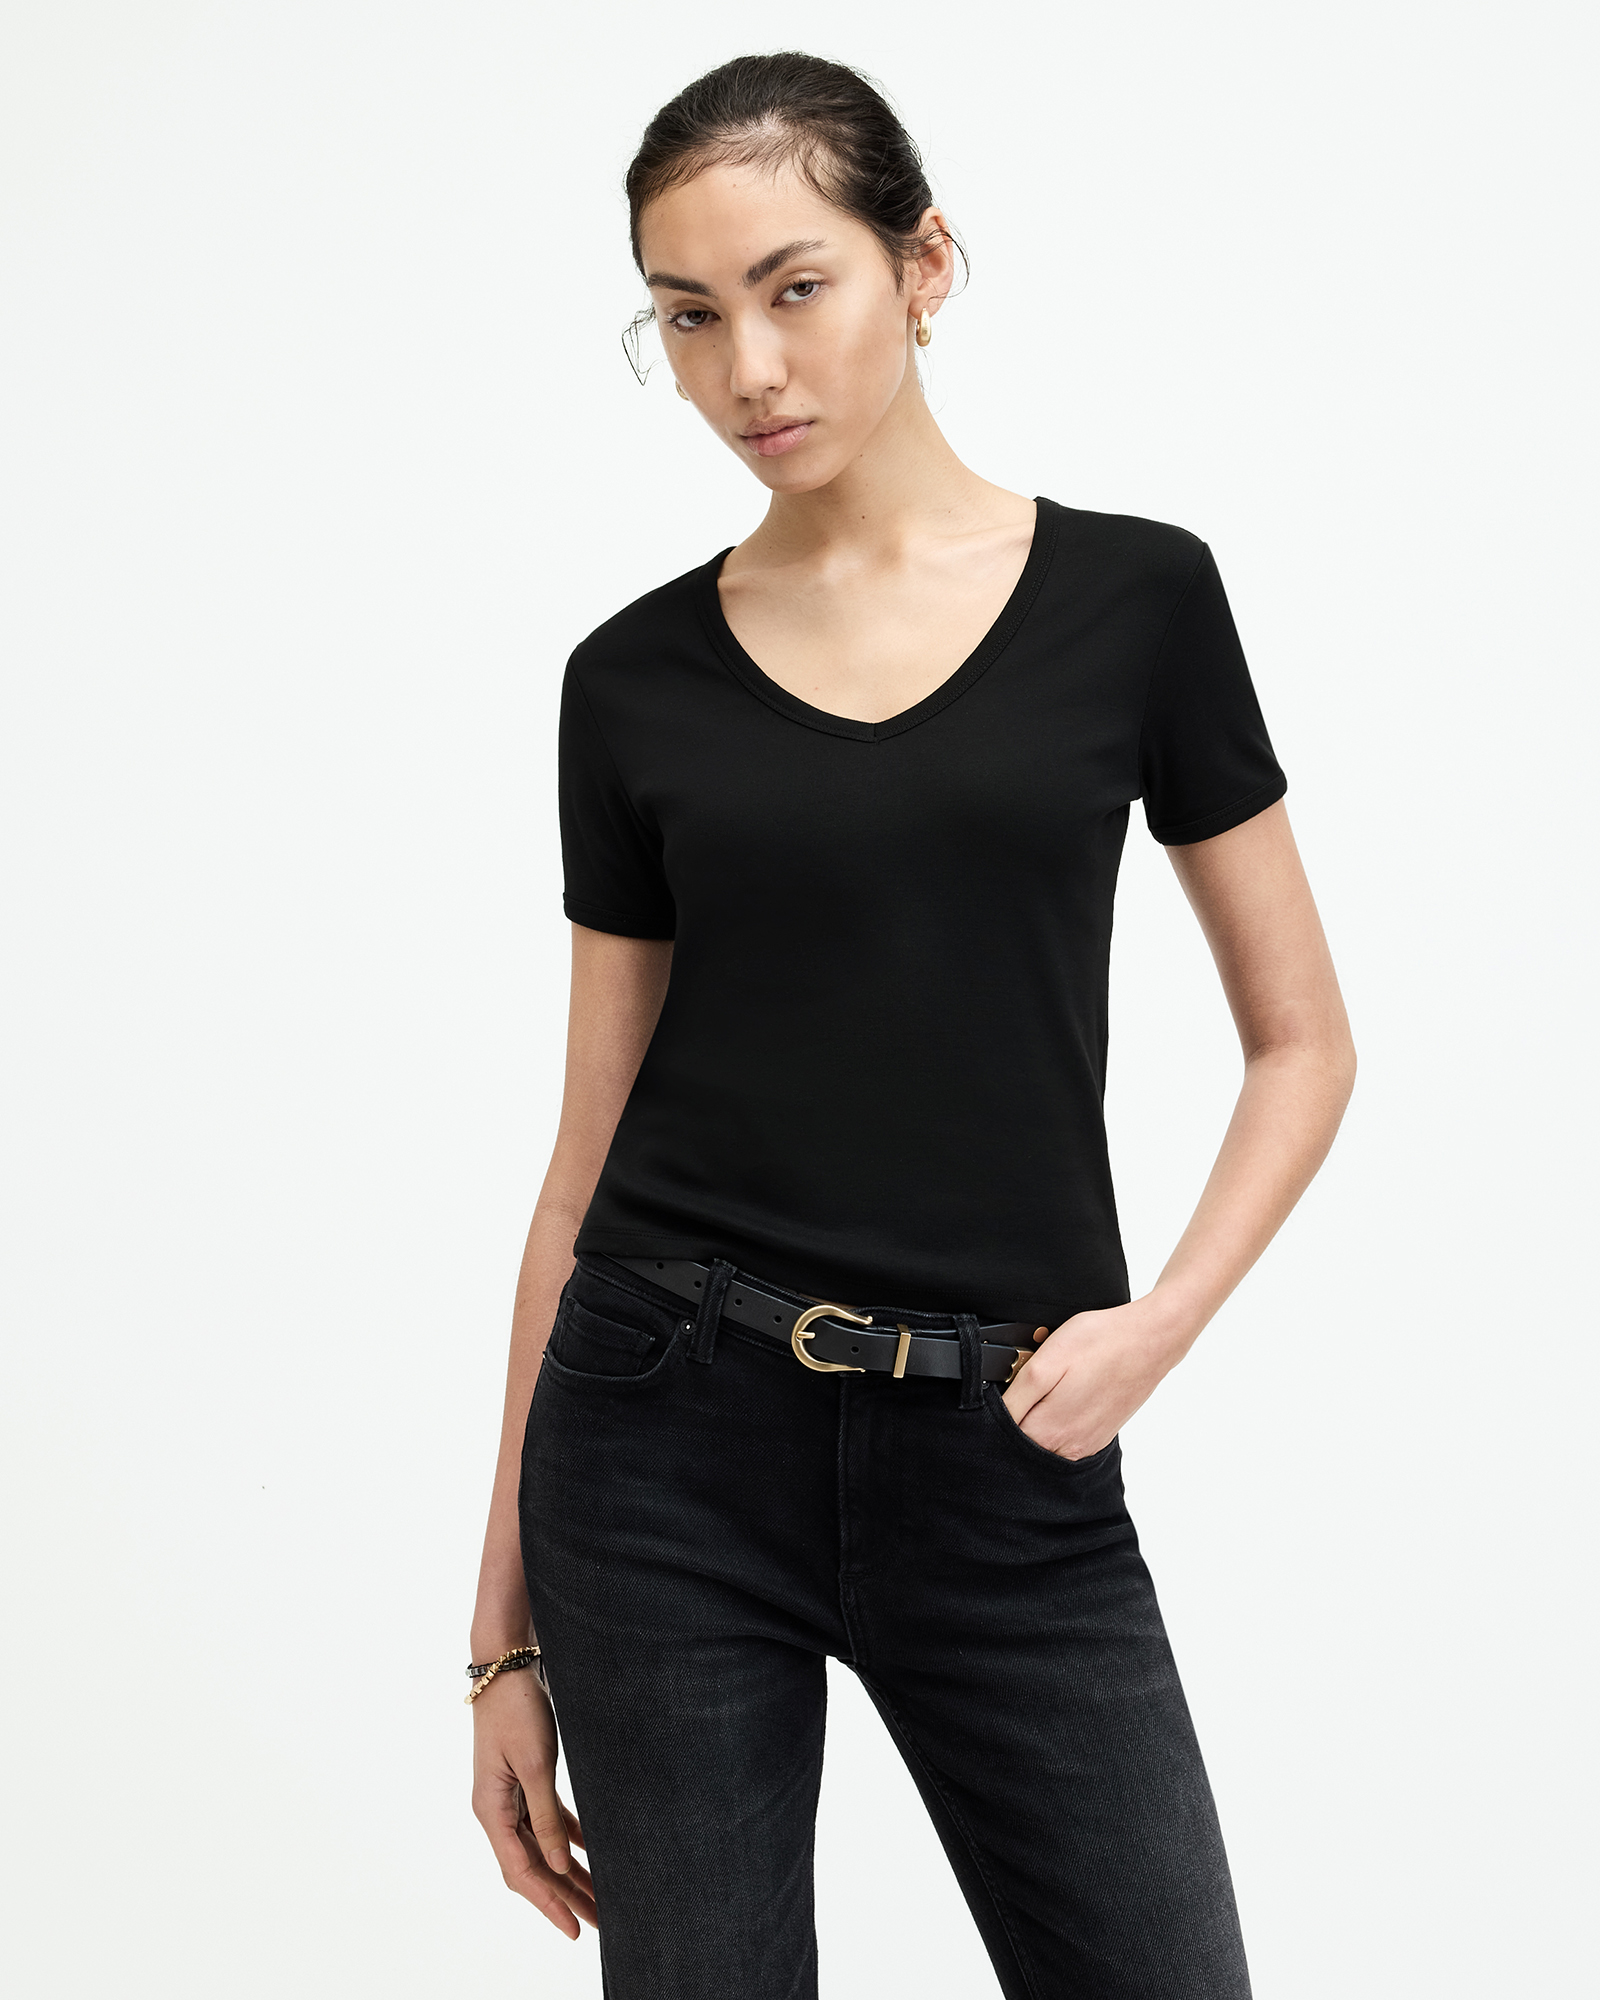 Cathalem Womens T Shirts Short Sleeve T Shirt Tight Tops Tee,Black S 